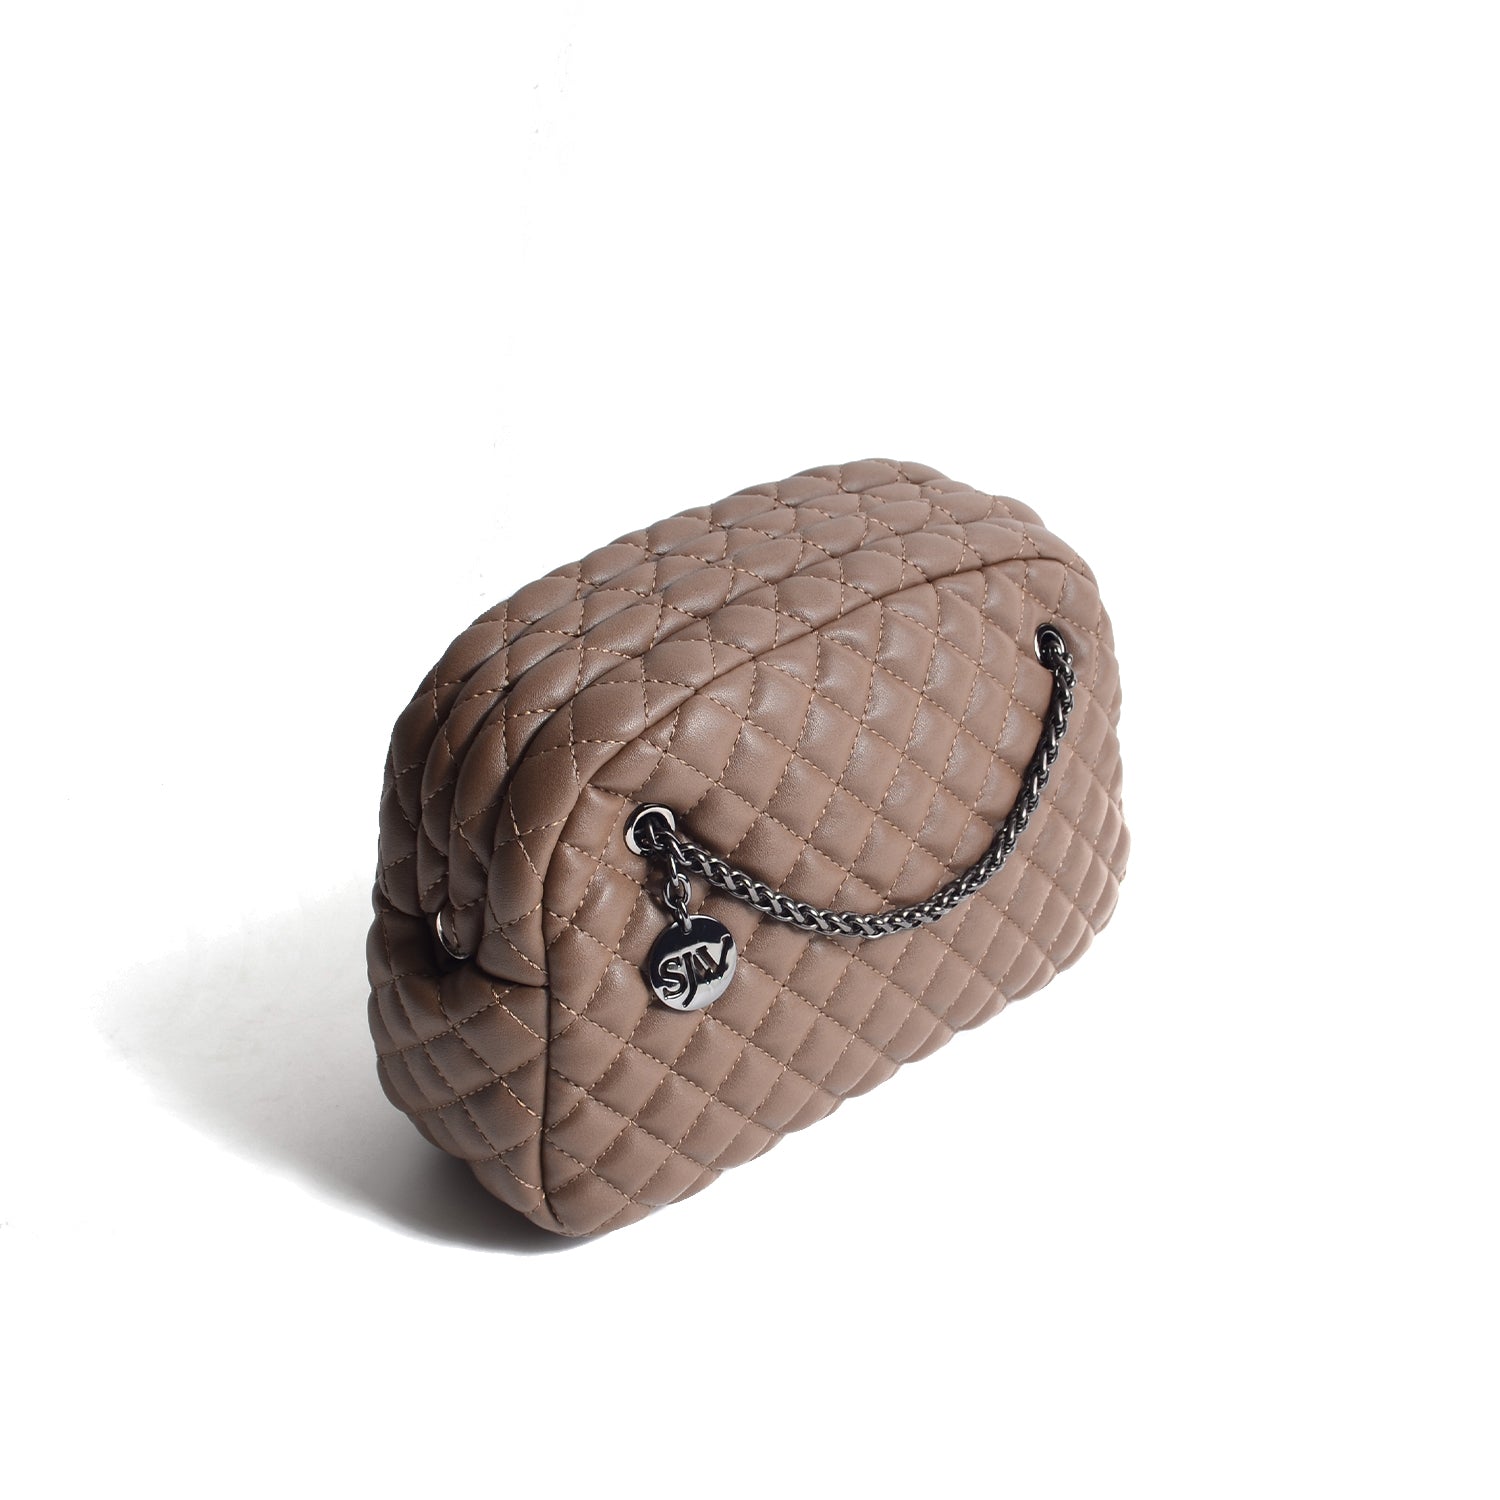 Carlton Vegan Leather Quilted Handbag - Brown - SJW BAGS LONDON